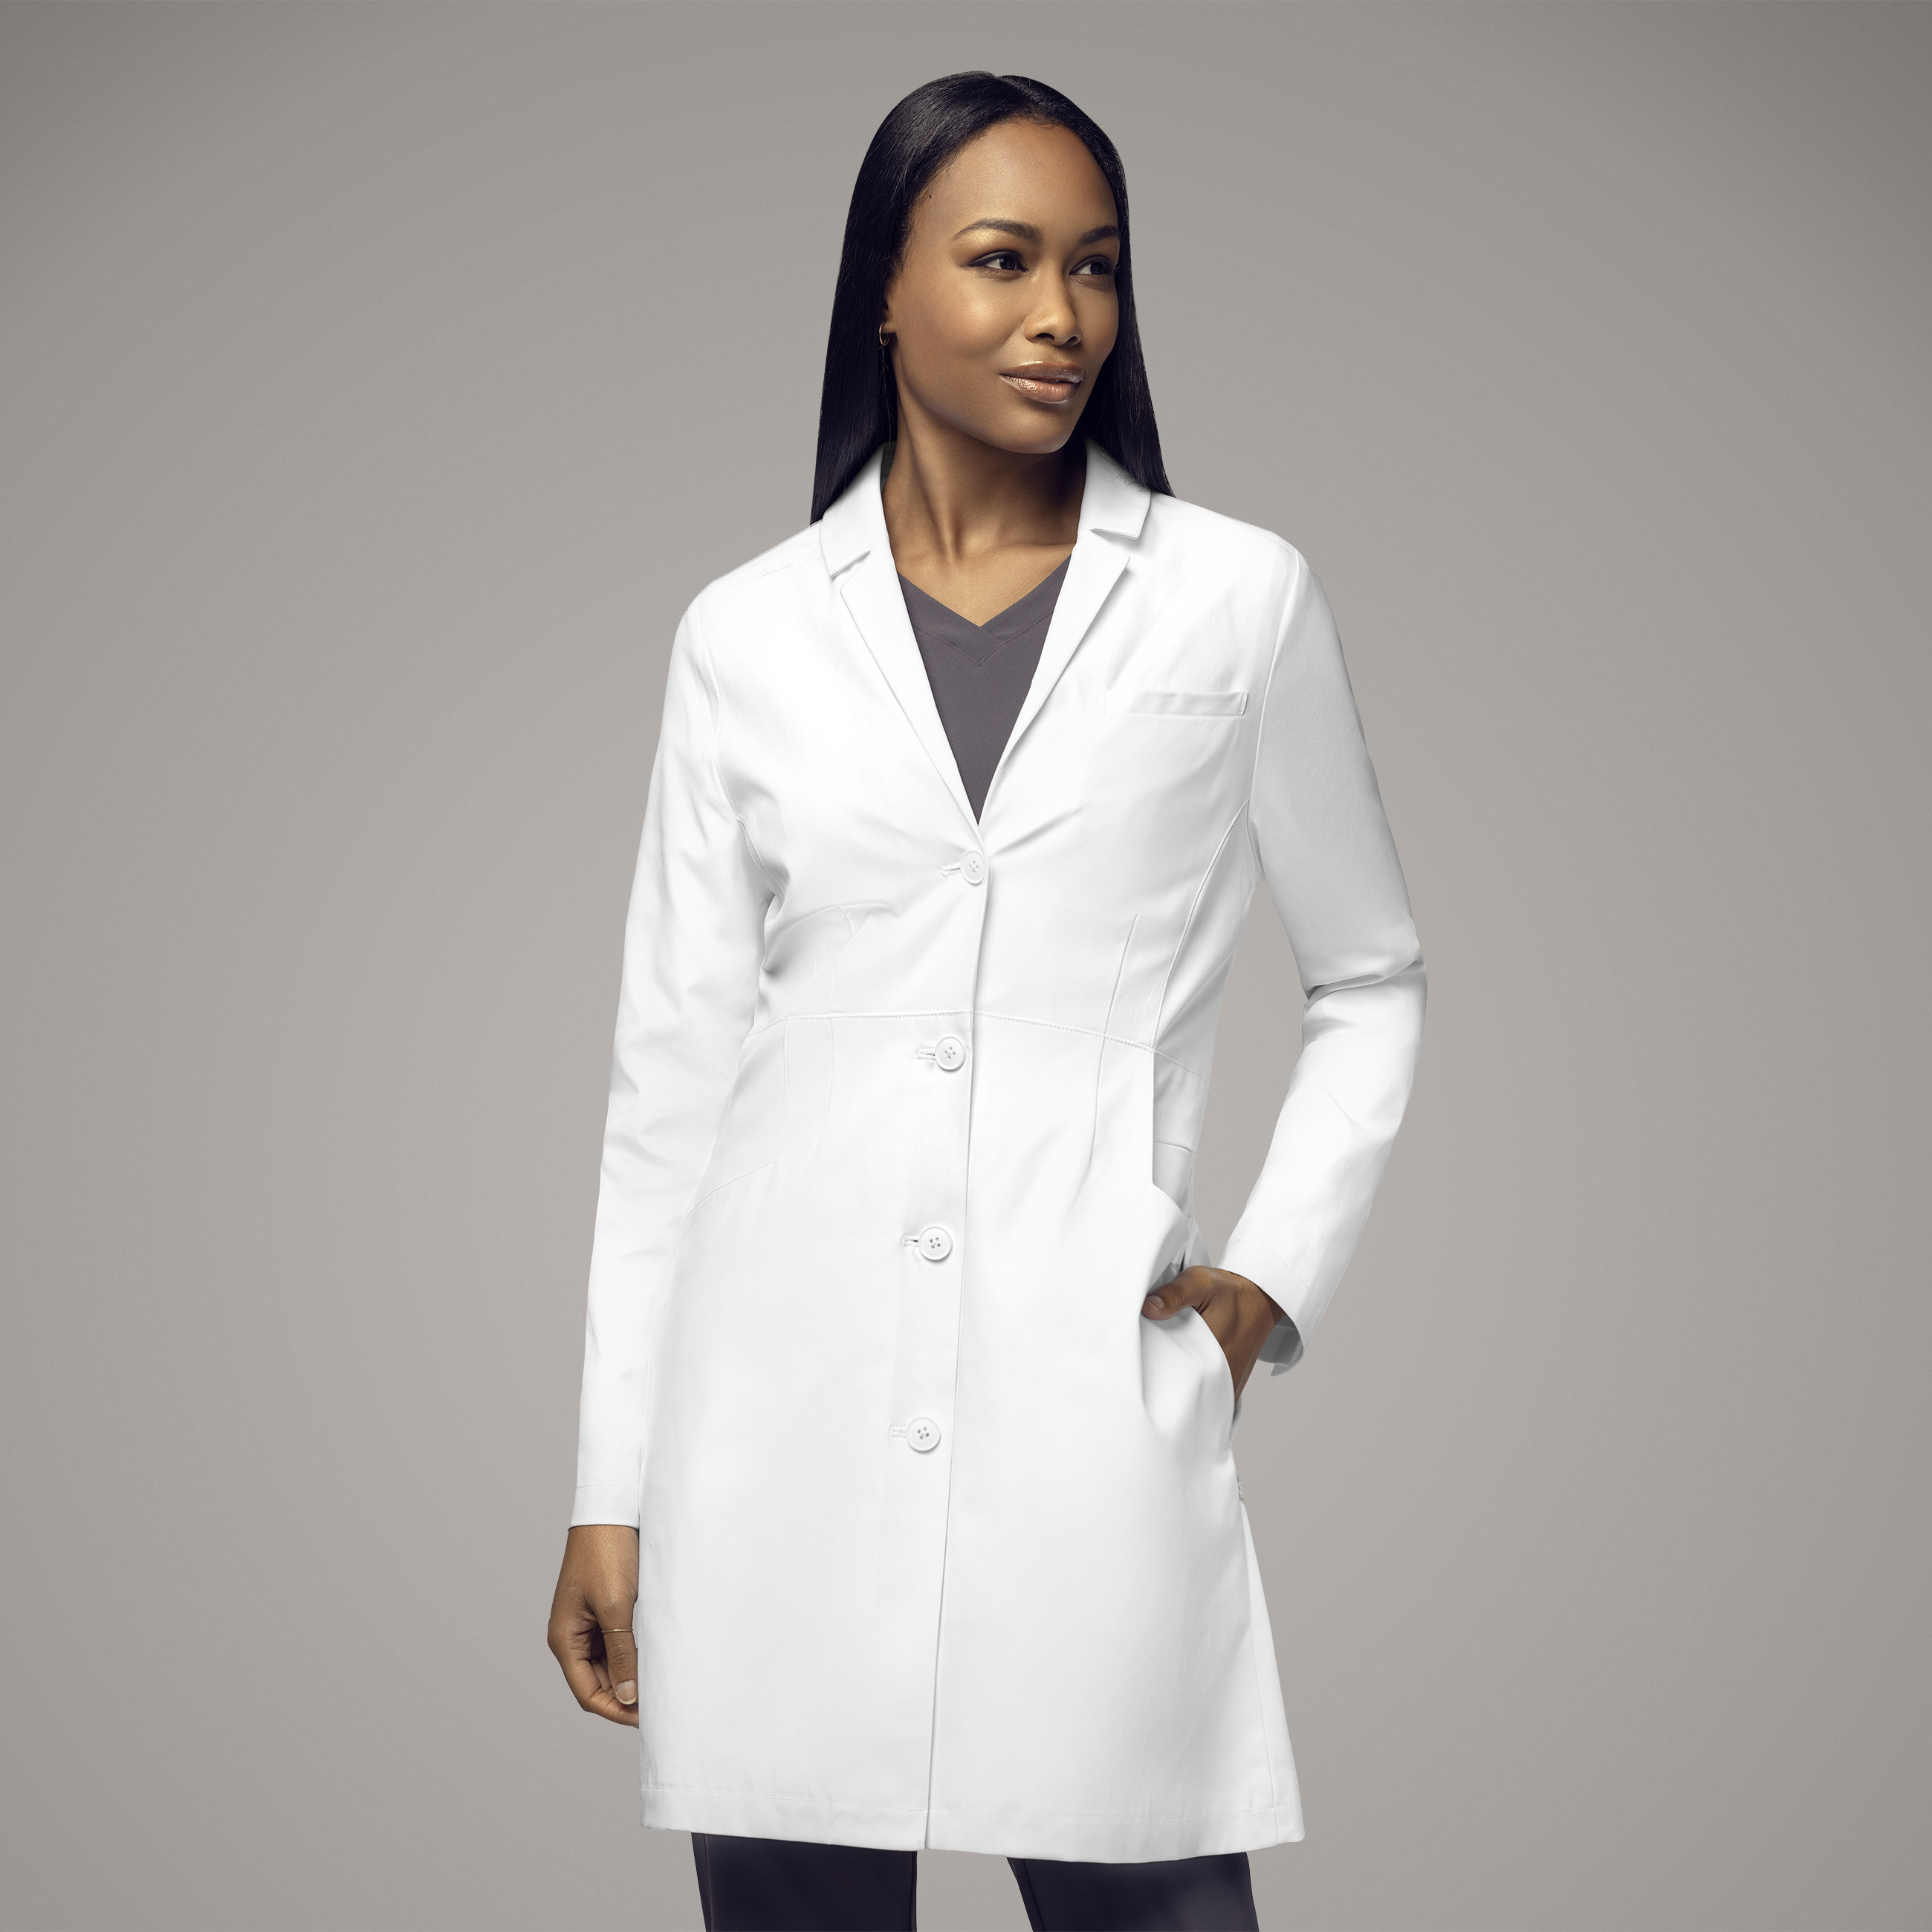 Wink Slate Women&#8216;s 35 Inch Doctors Coat-